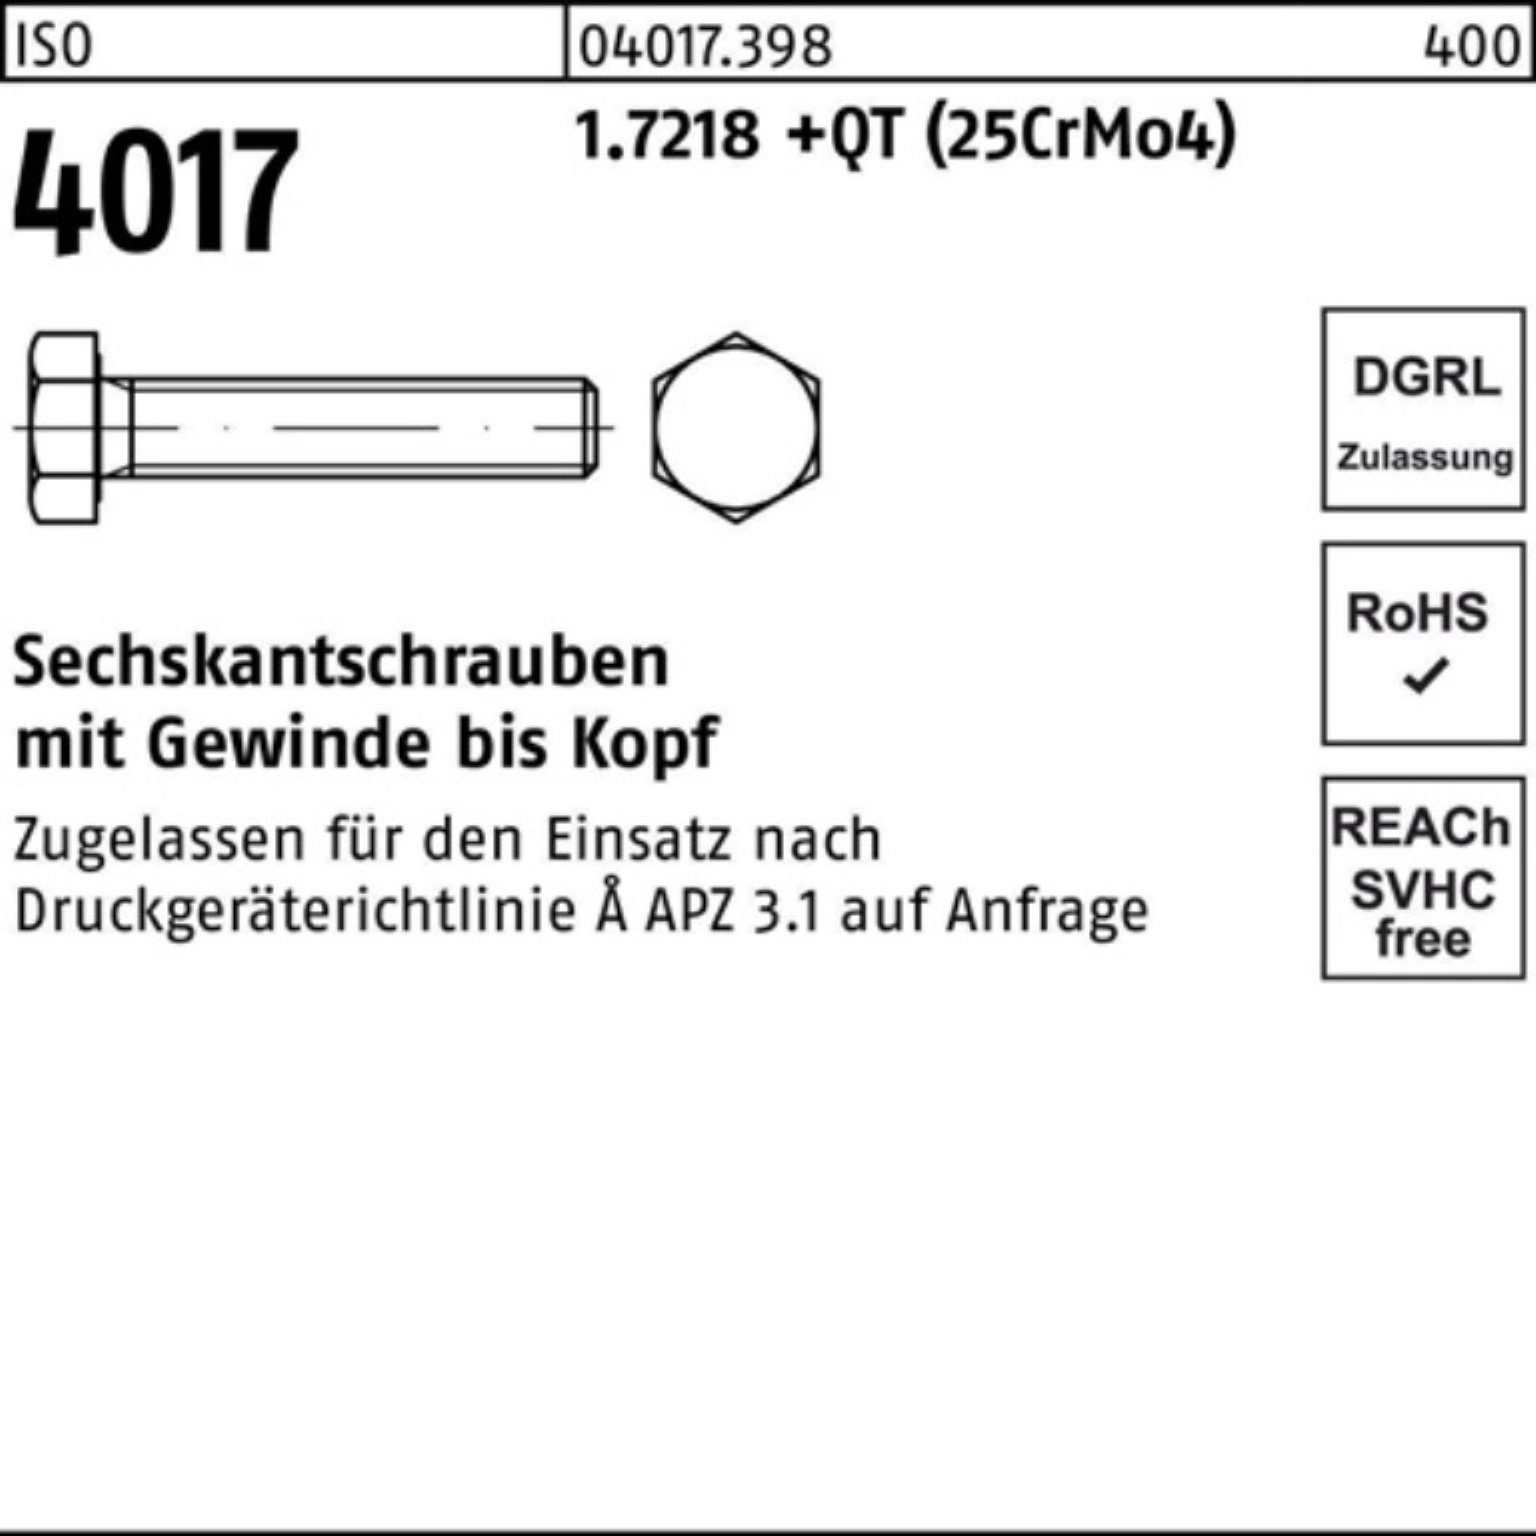 VG Sechskantschraube 4017 Sechskantschraube ISO (25CrMo4) 1.7218 180 Pack Bufab +QT M20x 100er